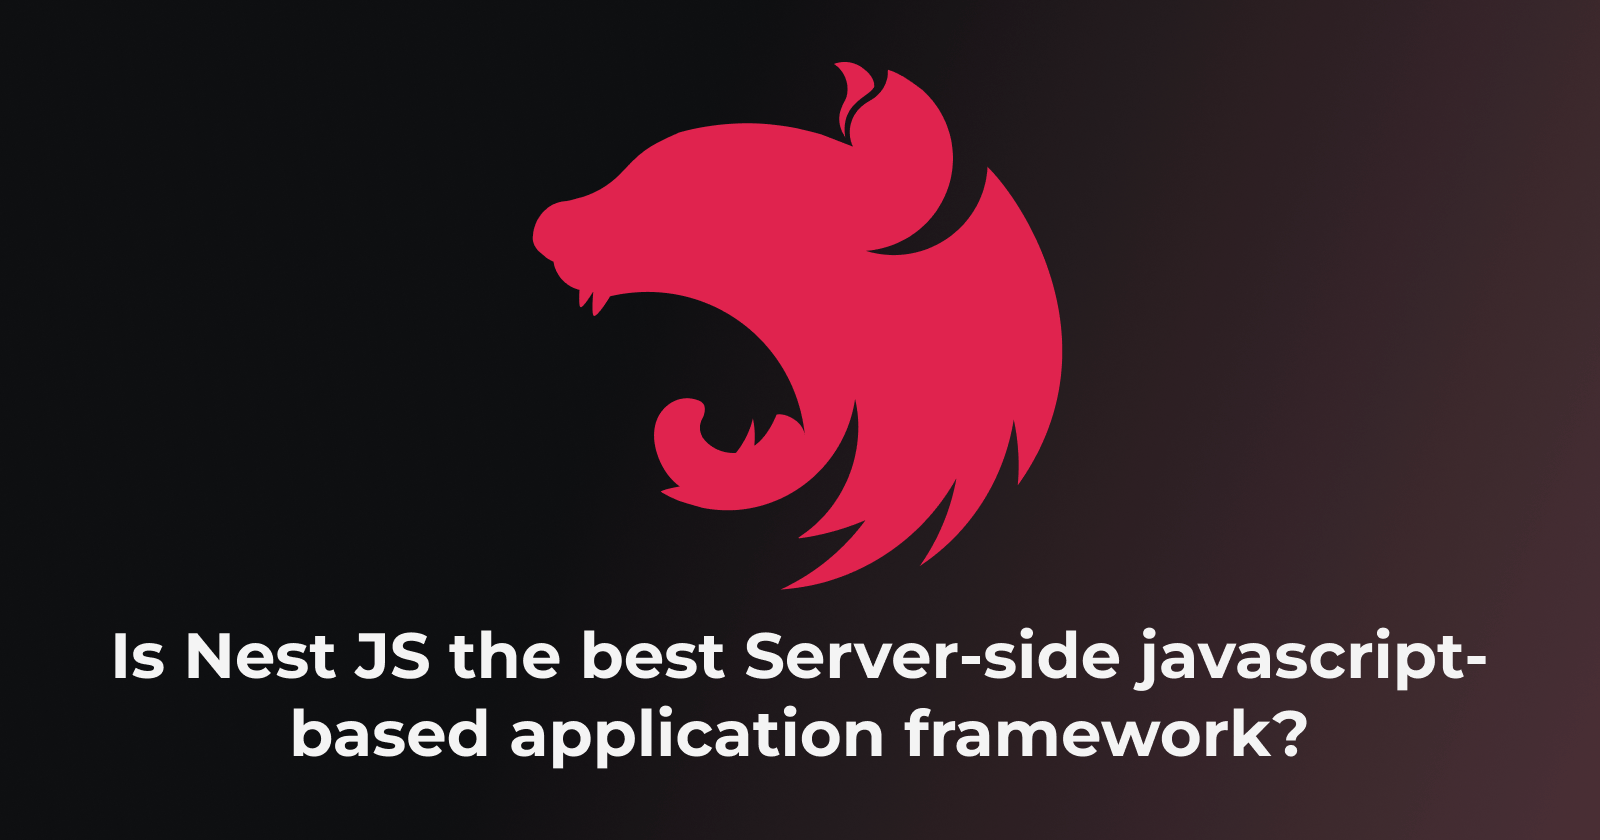 Is Nest JS the best Server-side javascript-based application framework?